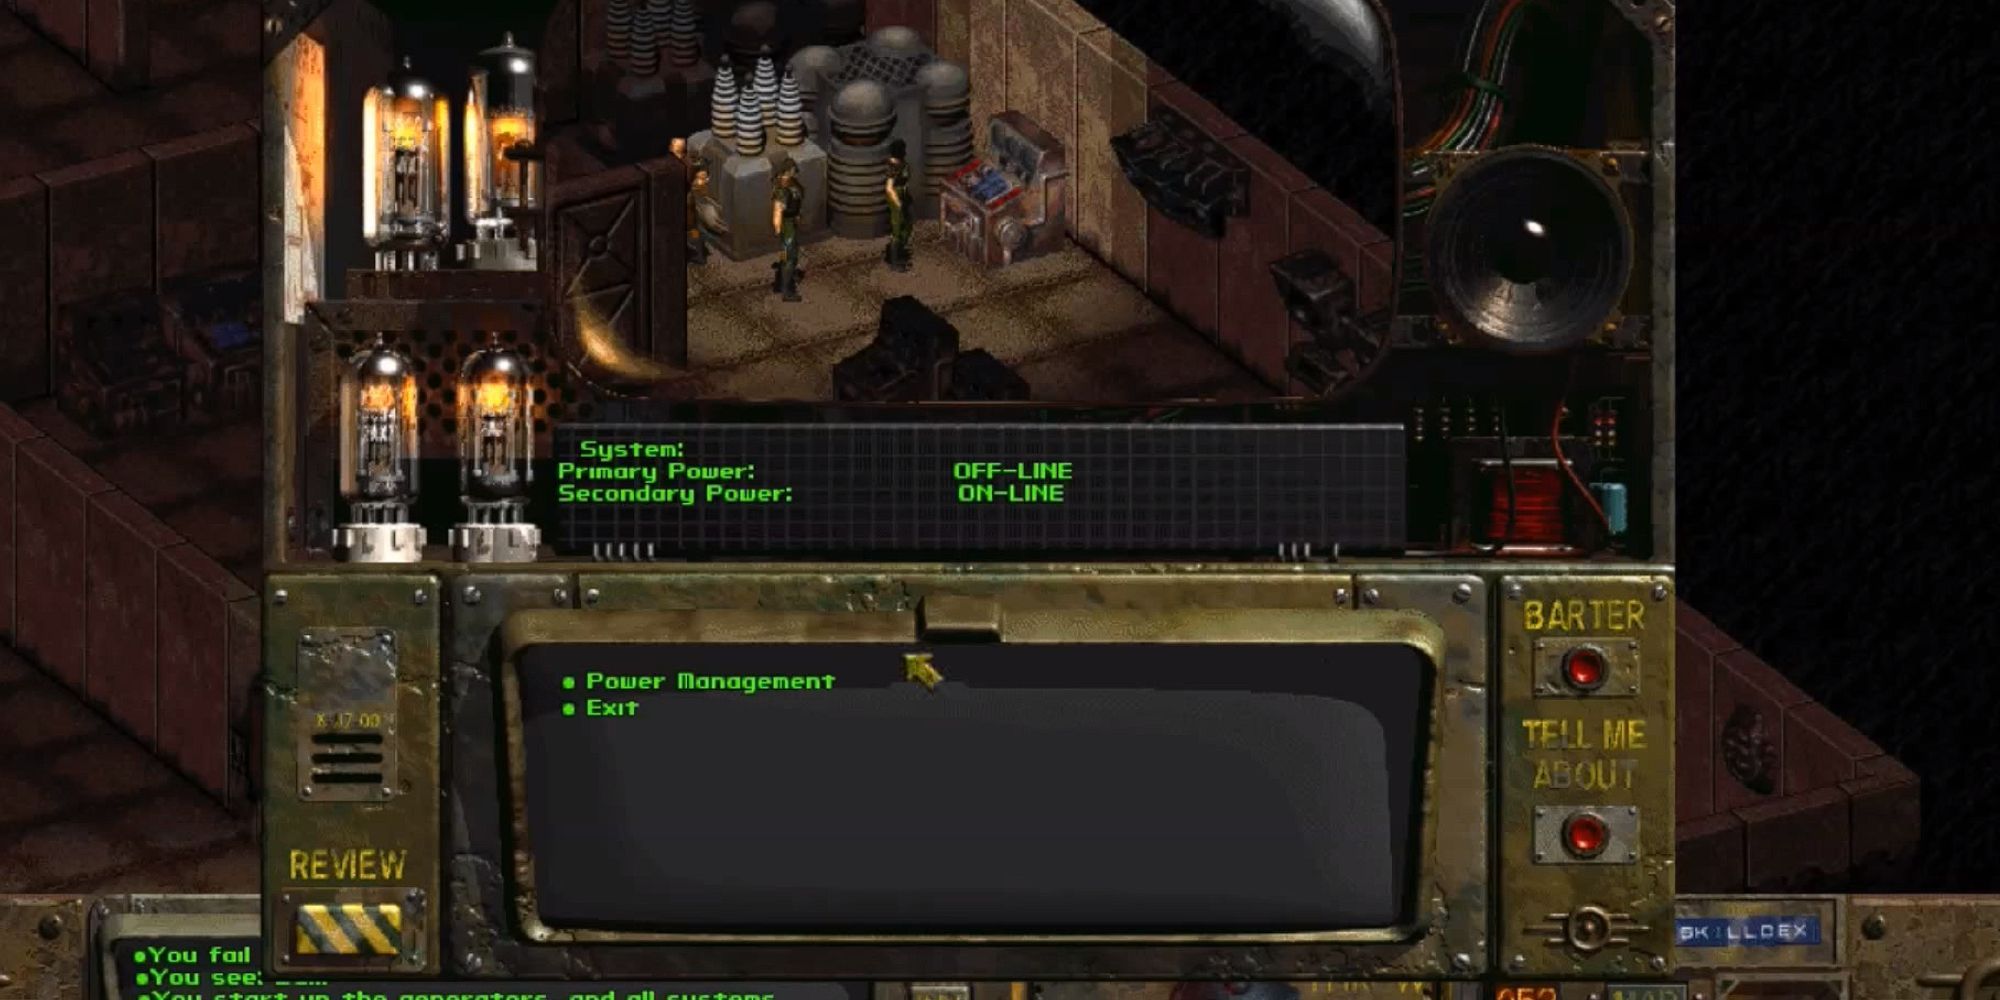 The player encounters an offline generator in need of repair in Glow.